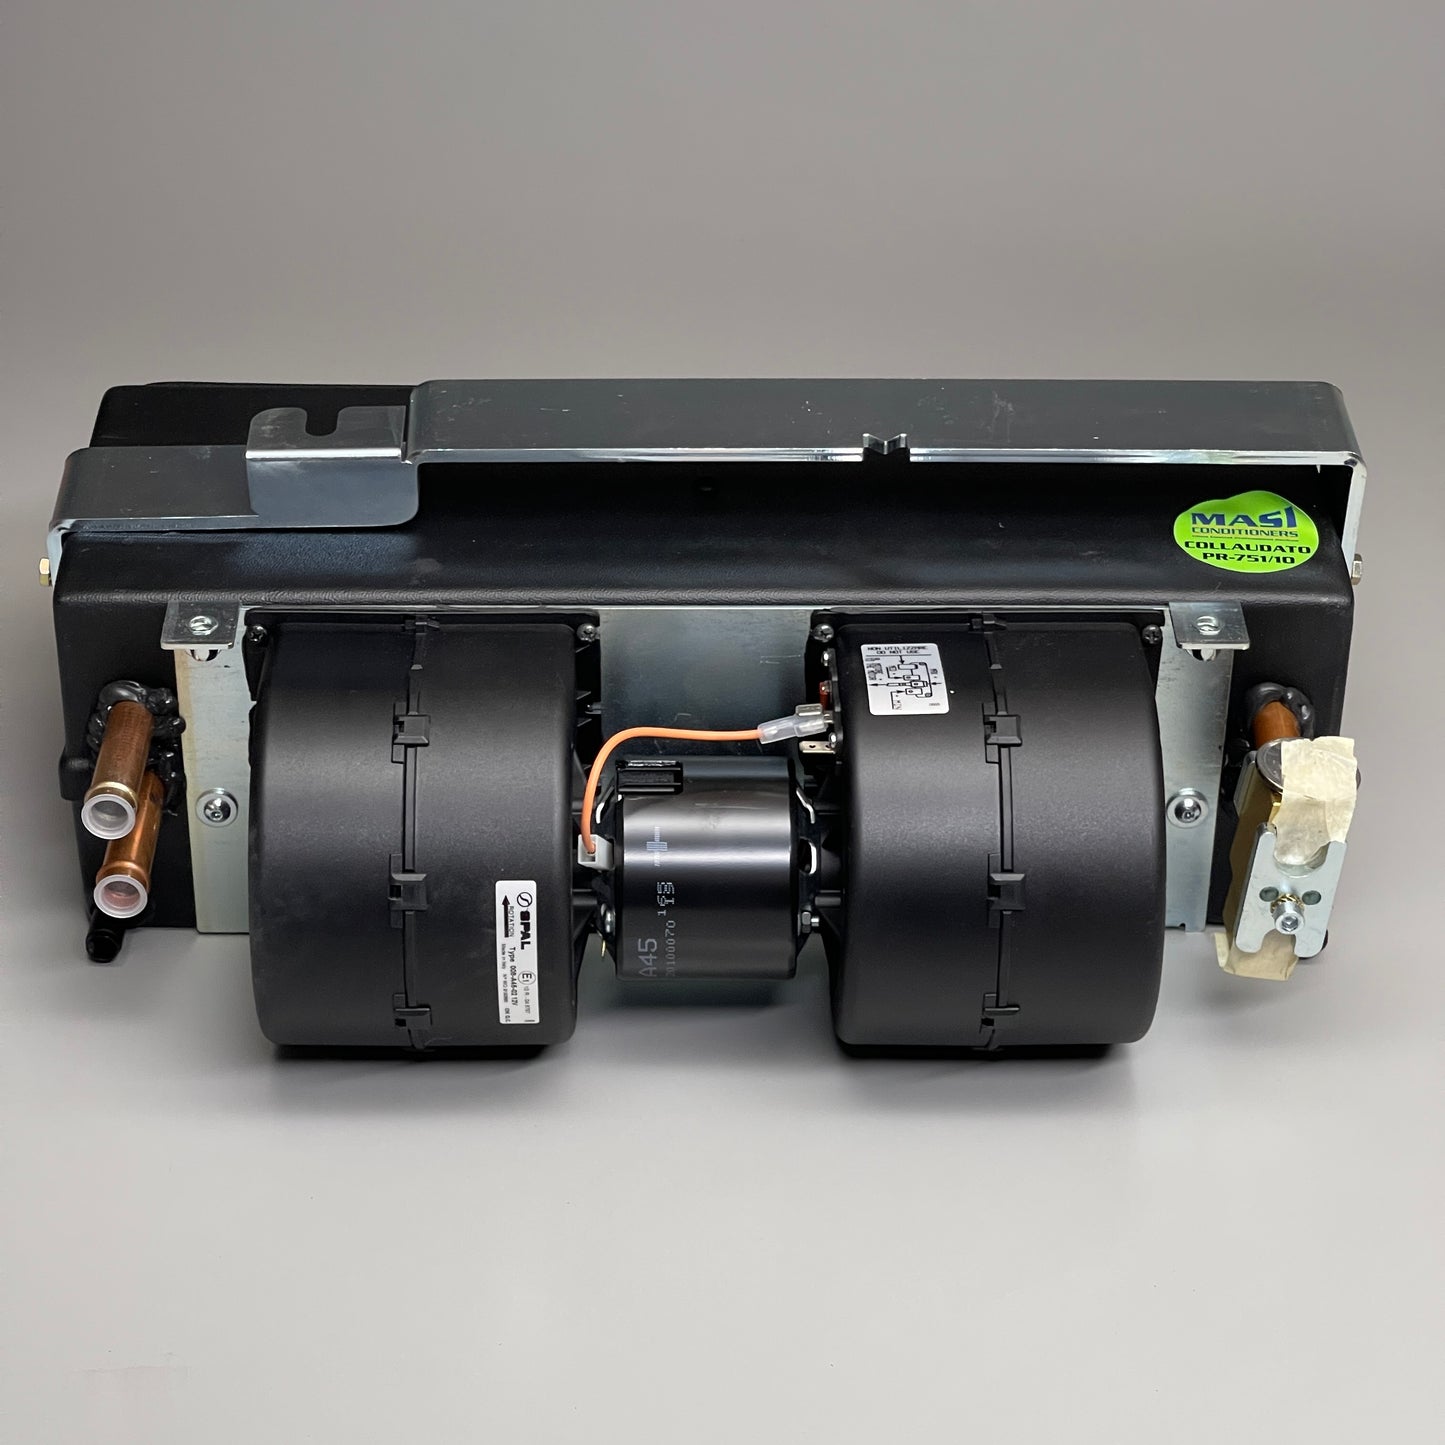 GENIE Universal Underdash A/C Evaporator Heater & Cooling Unit OEM 07.0723.0397 (New)